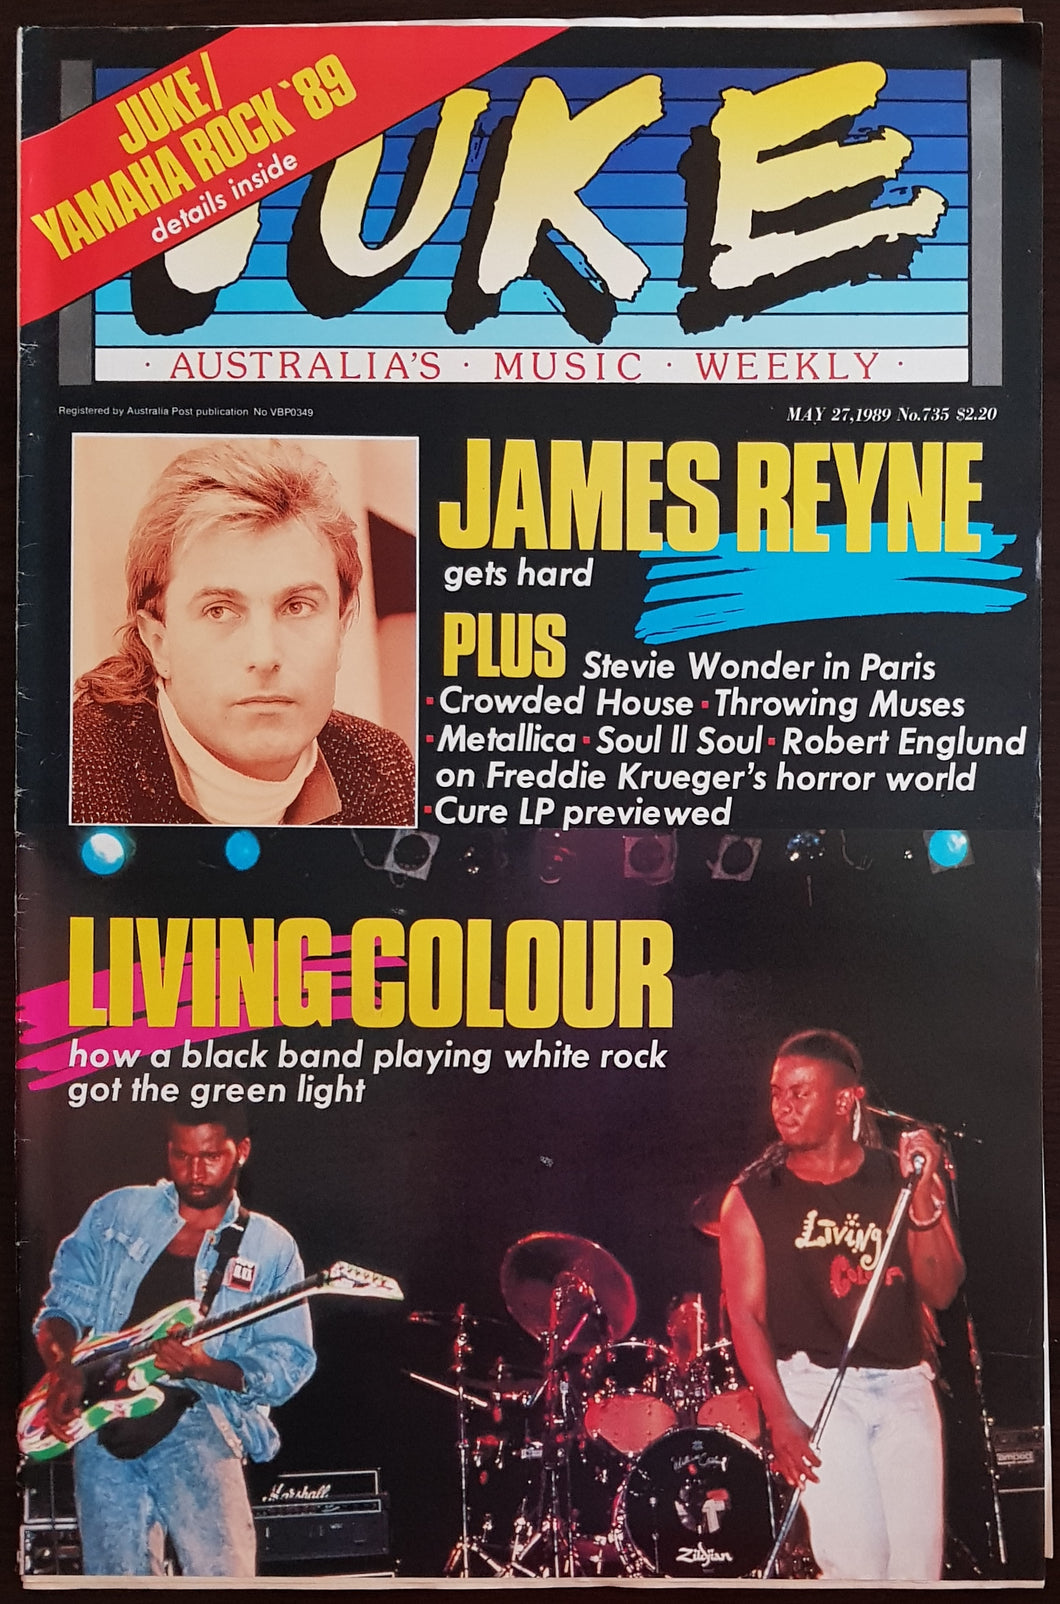 James Reyne - Juke May 27, 1989. Issue No.735